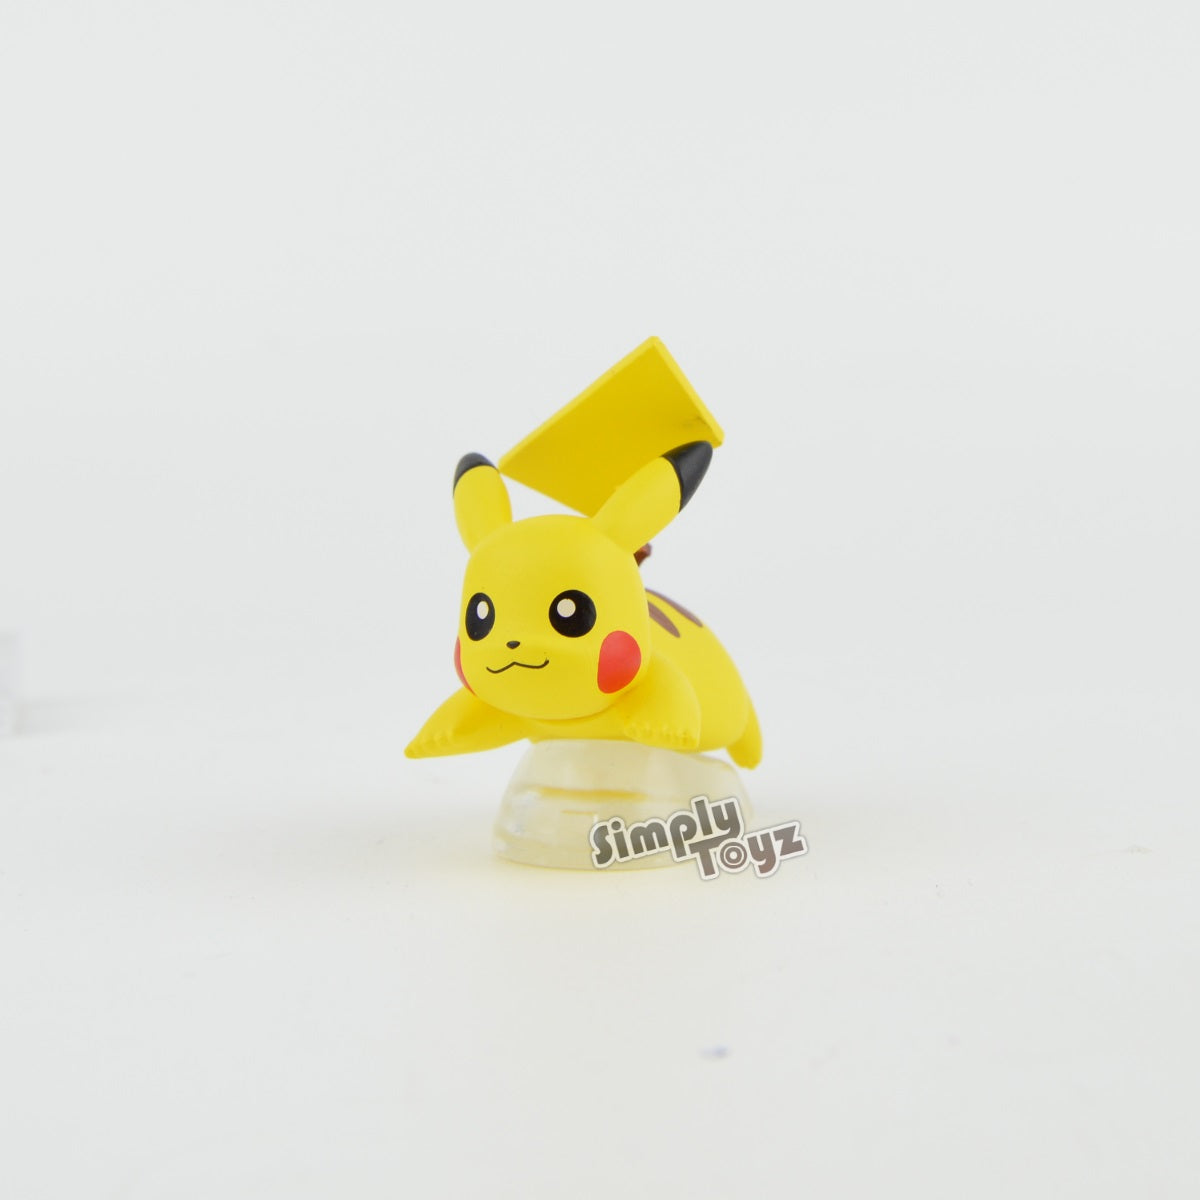 Pokemon Kanto Region Ippai Character Collection Mini Figure - Charizard 